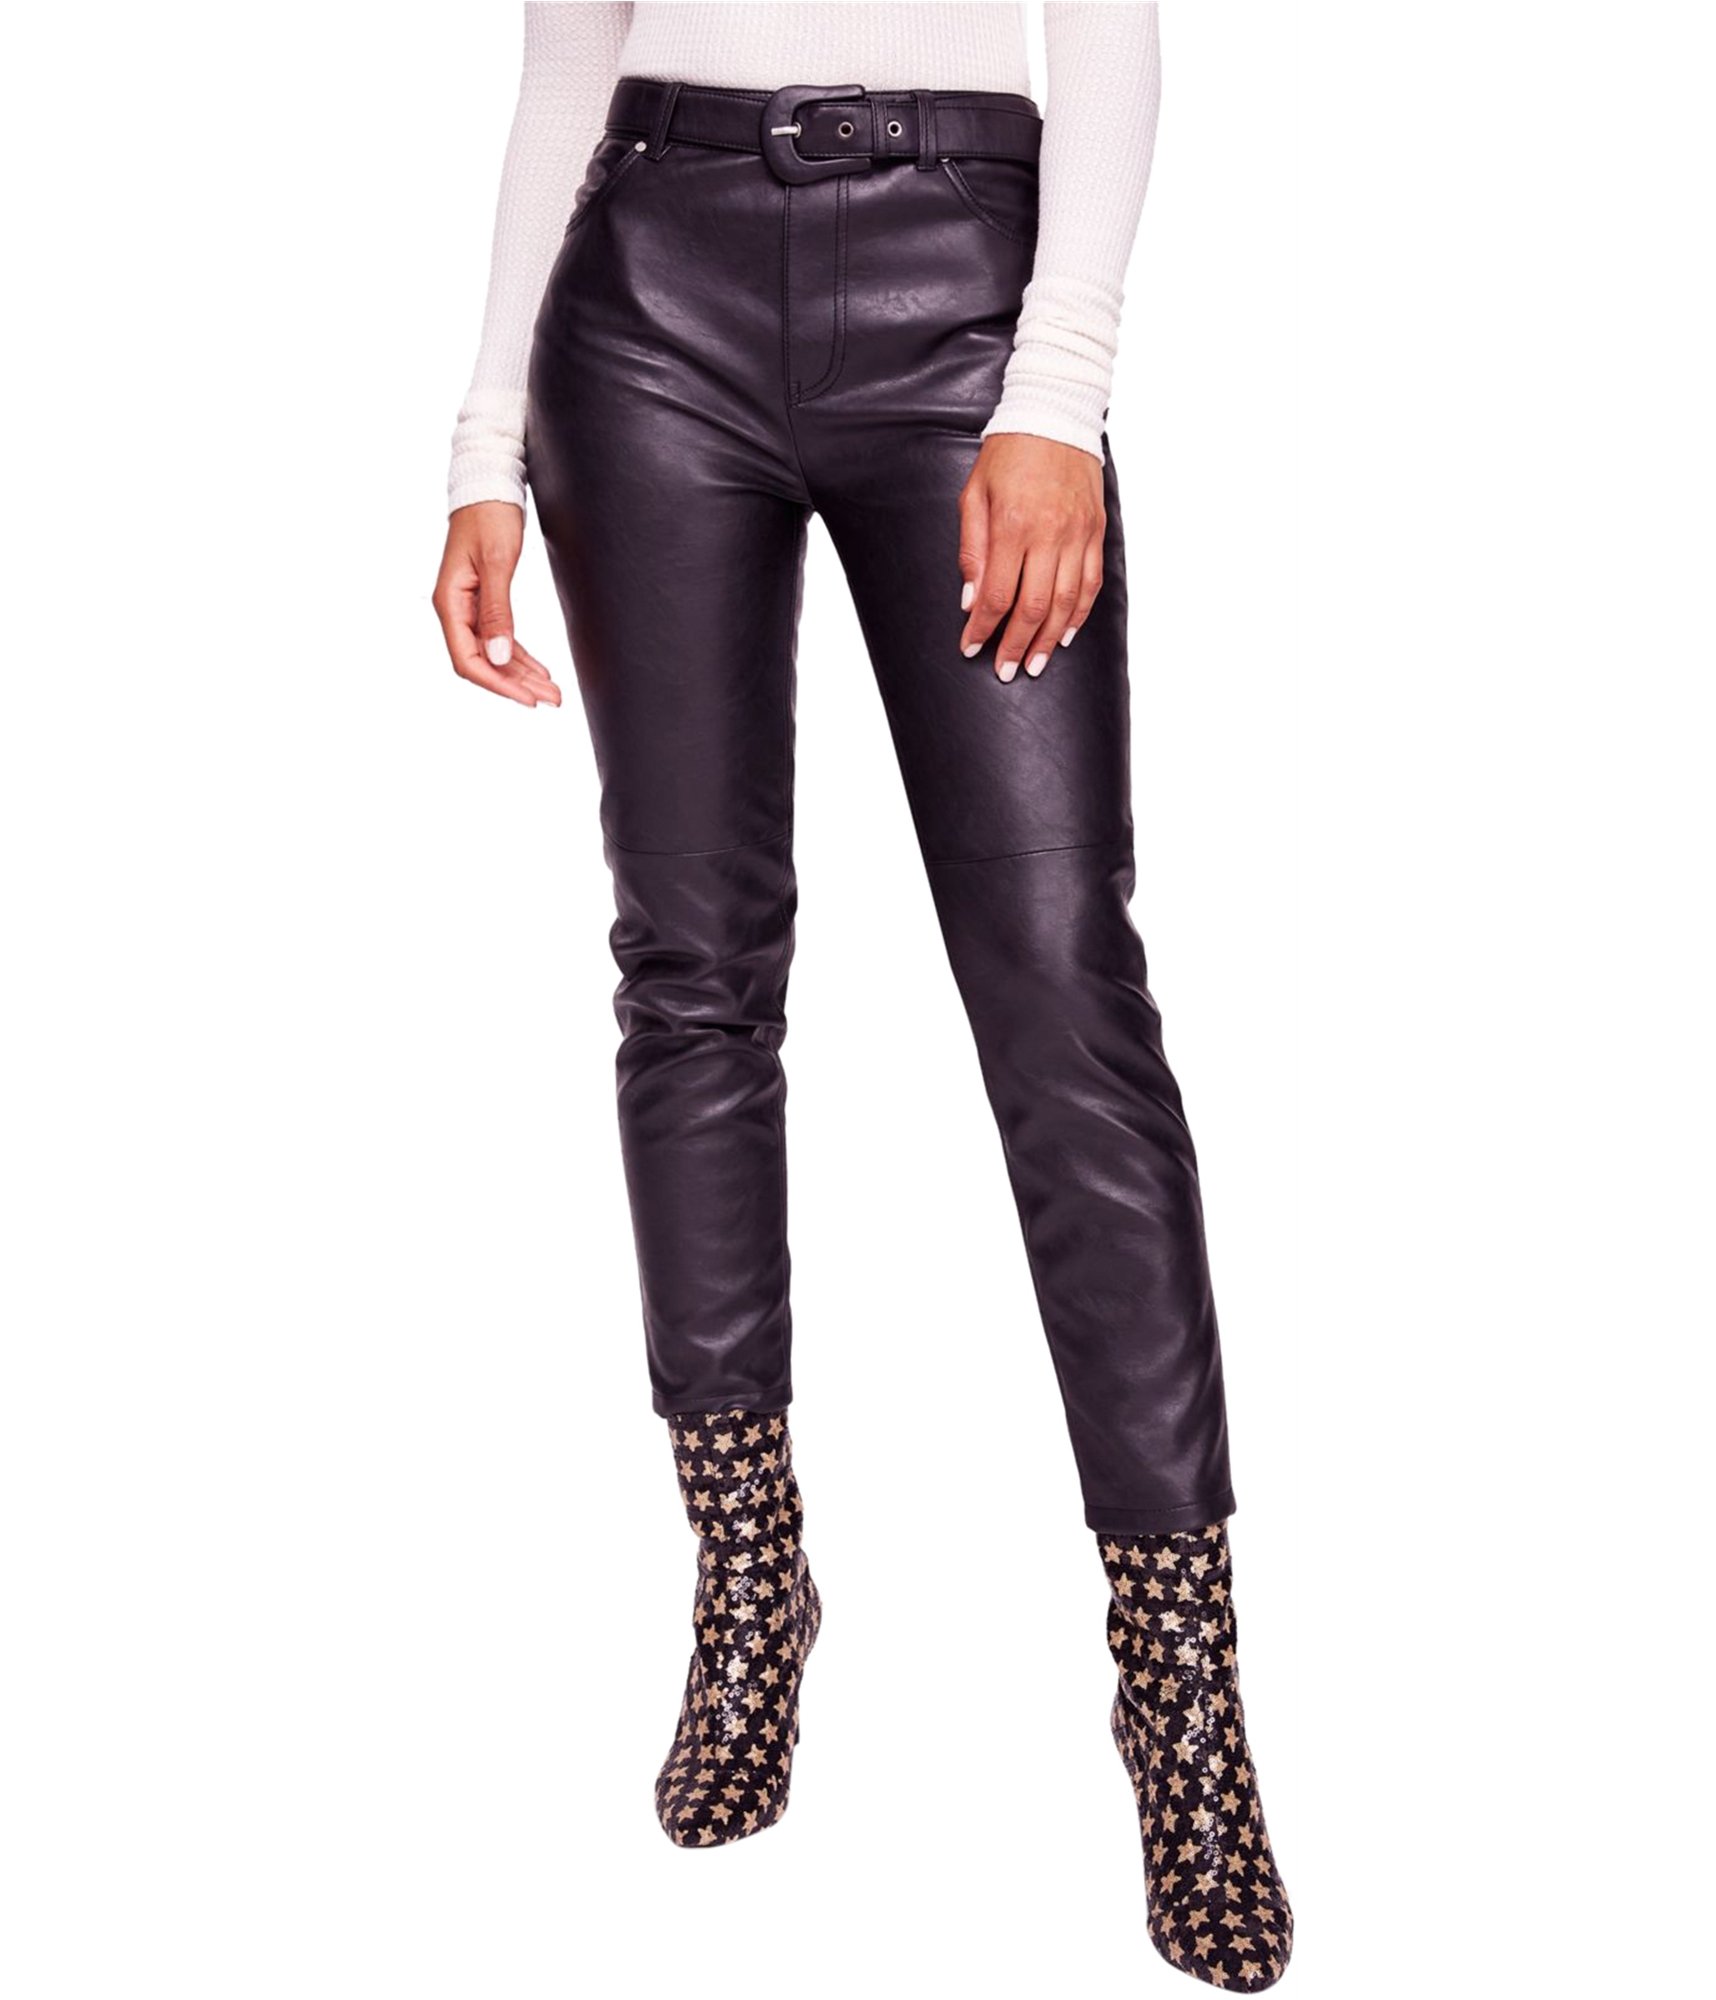 woman-wearing-faux-leather-skinny-jeans